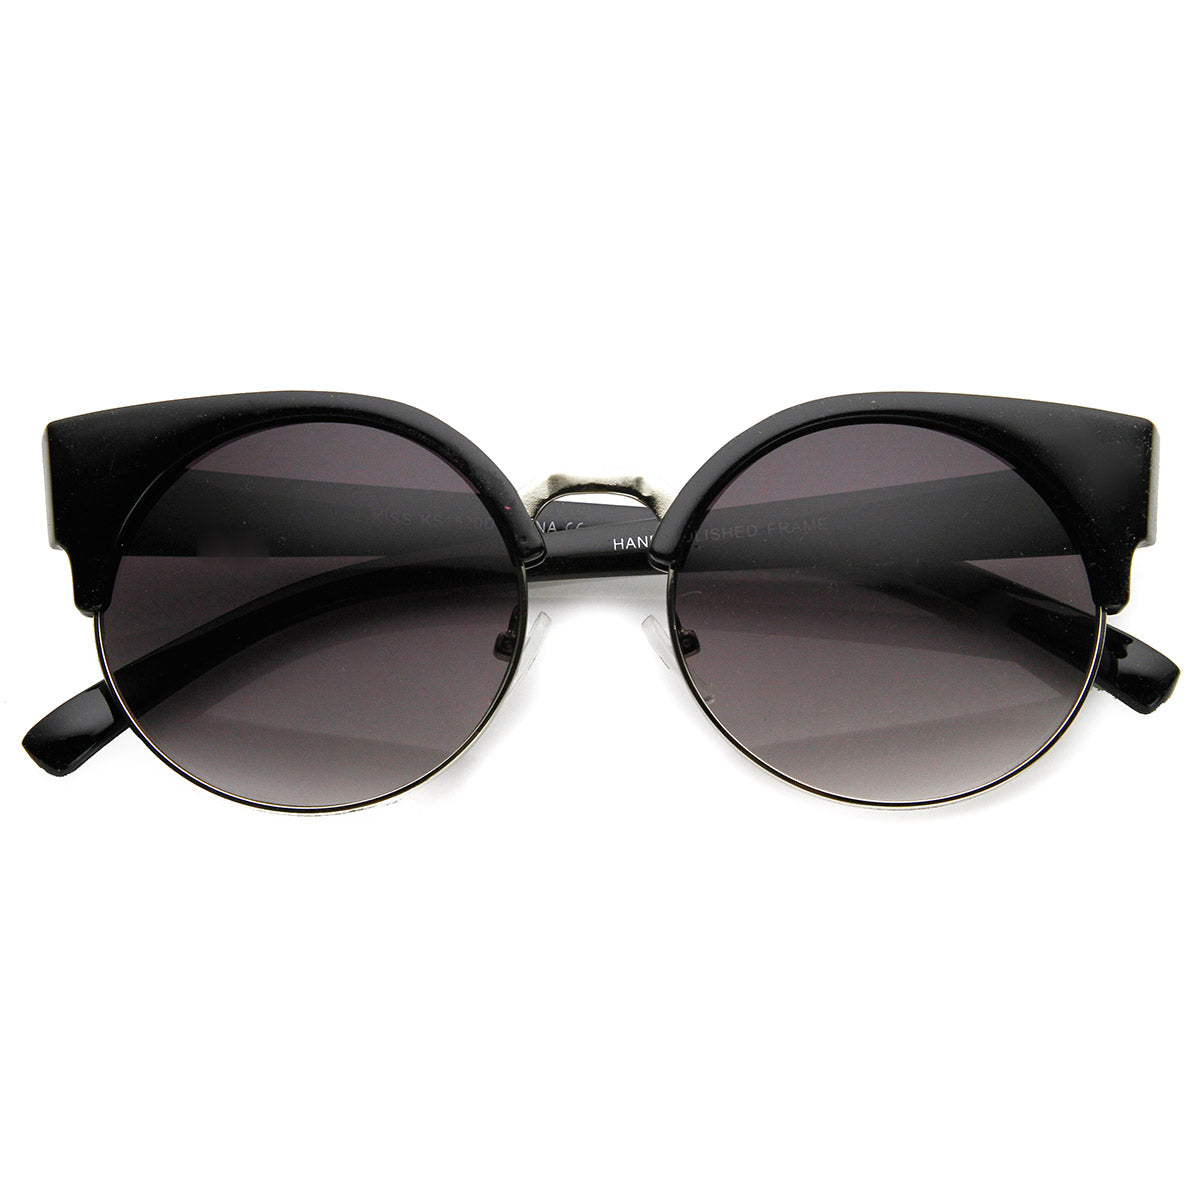 Chic Half Frame Semi-Rimless Round Cat Eye Sunglasses - sunglass.la